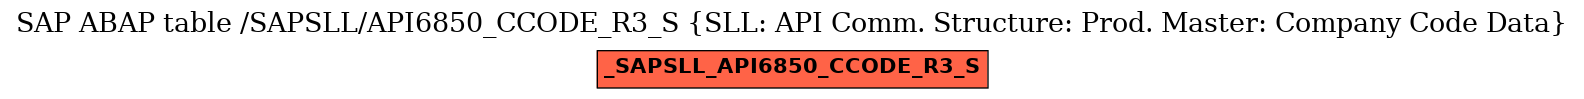 E-R Diagram for table /SAPSLL/API6850_CCODE_R3_S (SLL: API Comm. Structure: Prod. Master: Company Code Data)